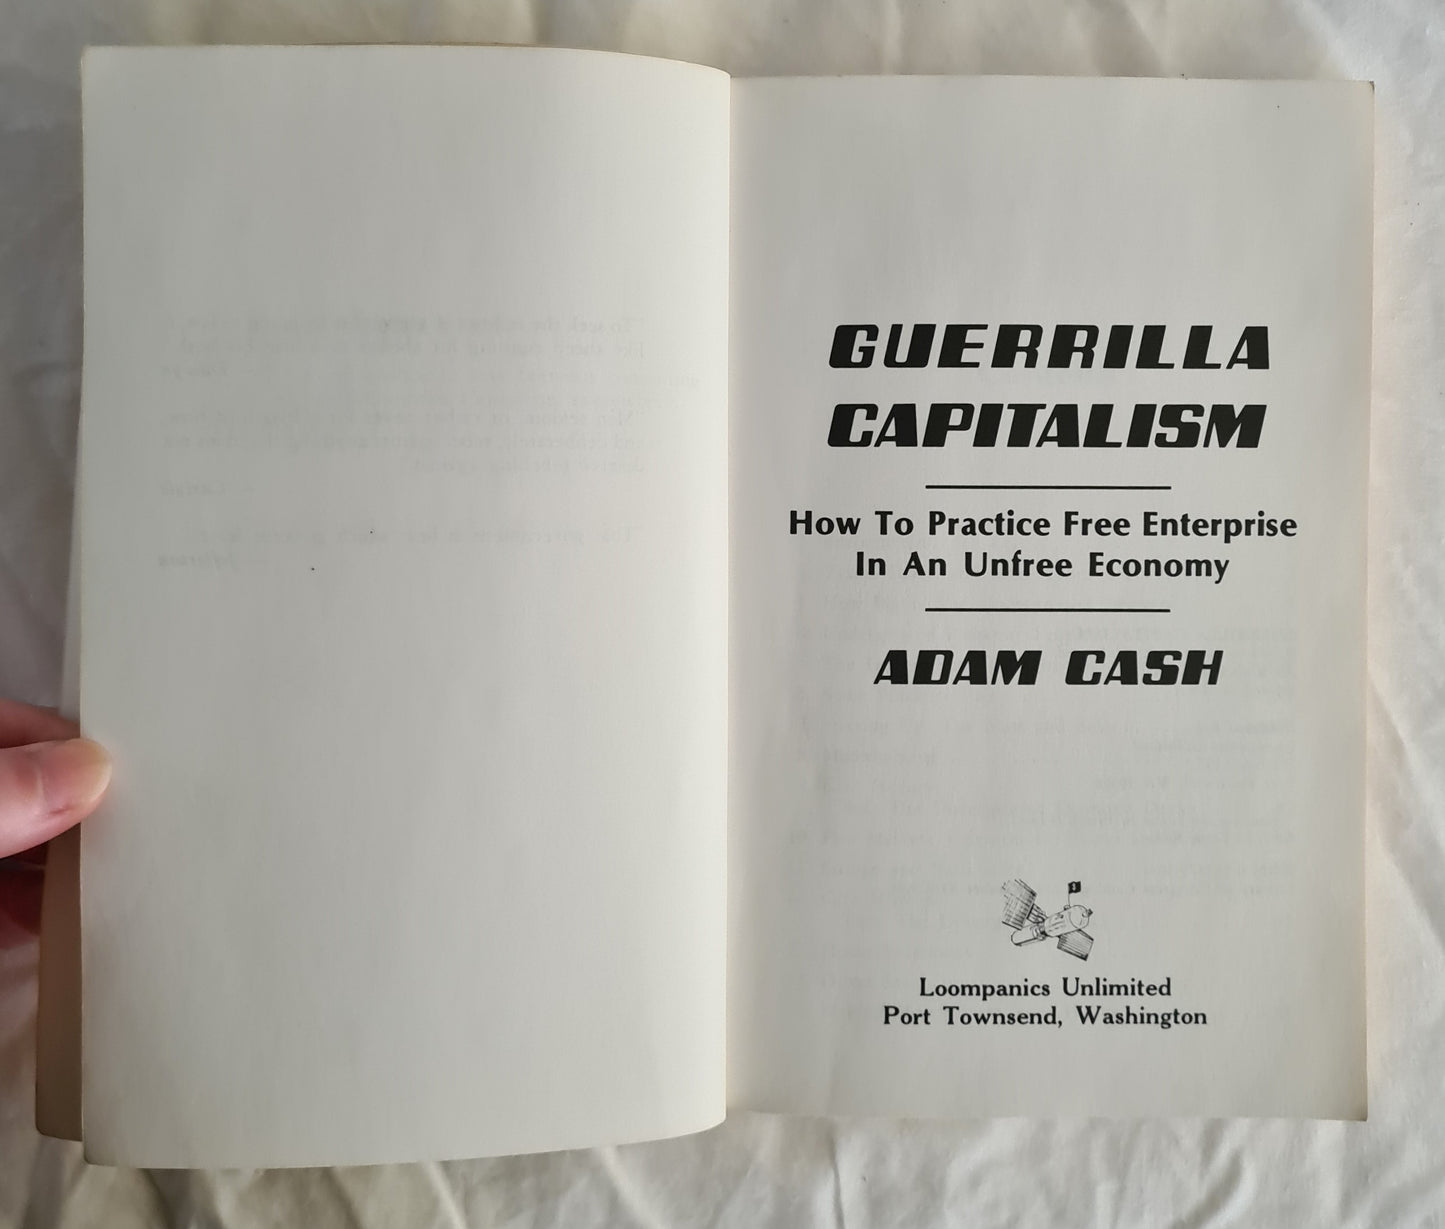 Guerrilla Capitalism by Adam Cash